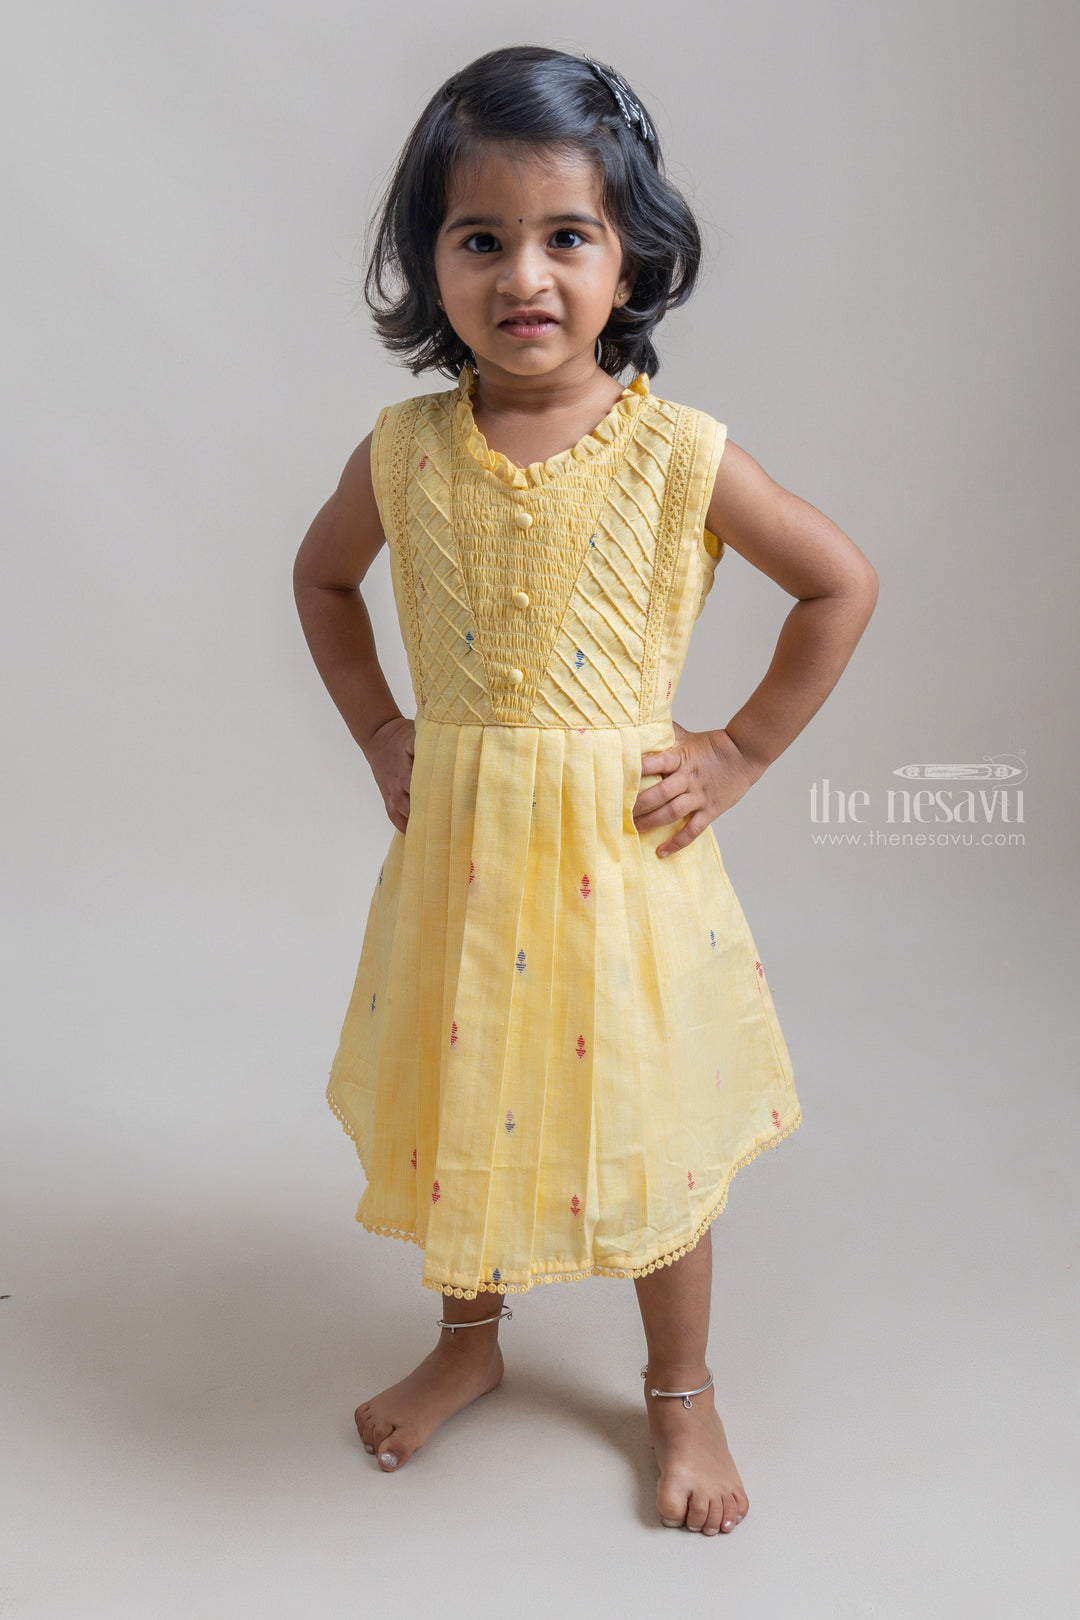 The Nesavu Frocks & Dresses Charming Yellow Sleeveless Pleated Casual Cotton Frock For Girls psr silks Nesavu 22 (4Y) / Yellow GFC1002C